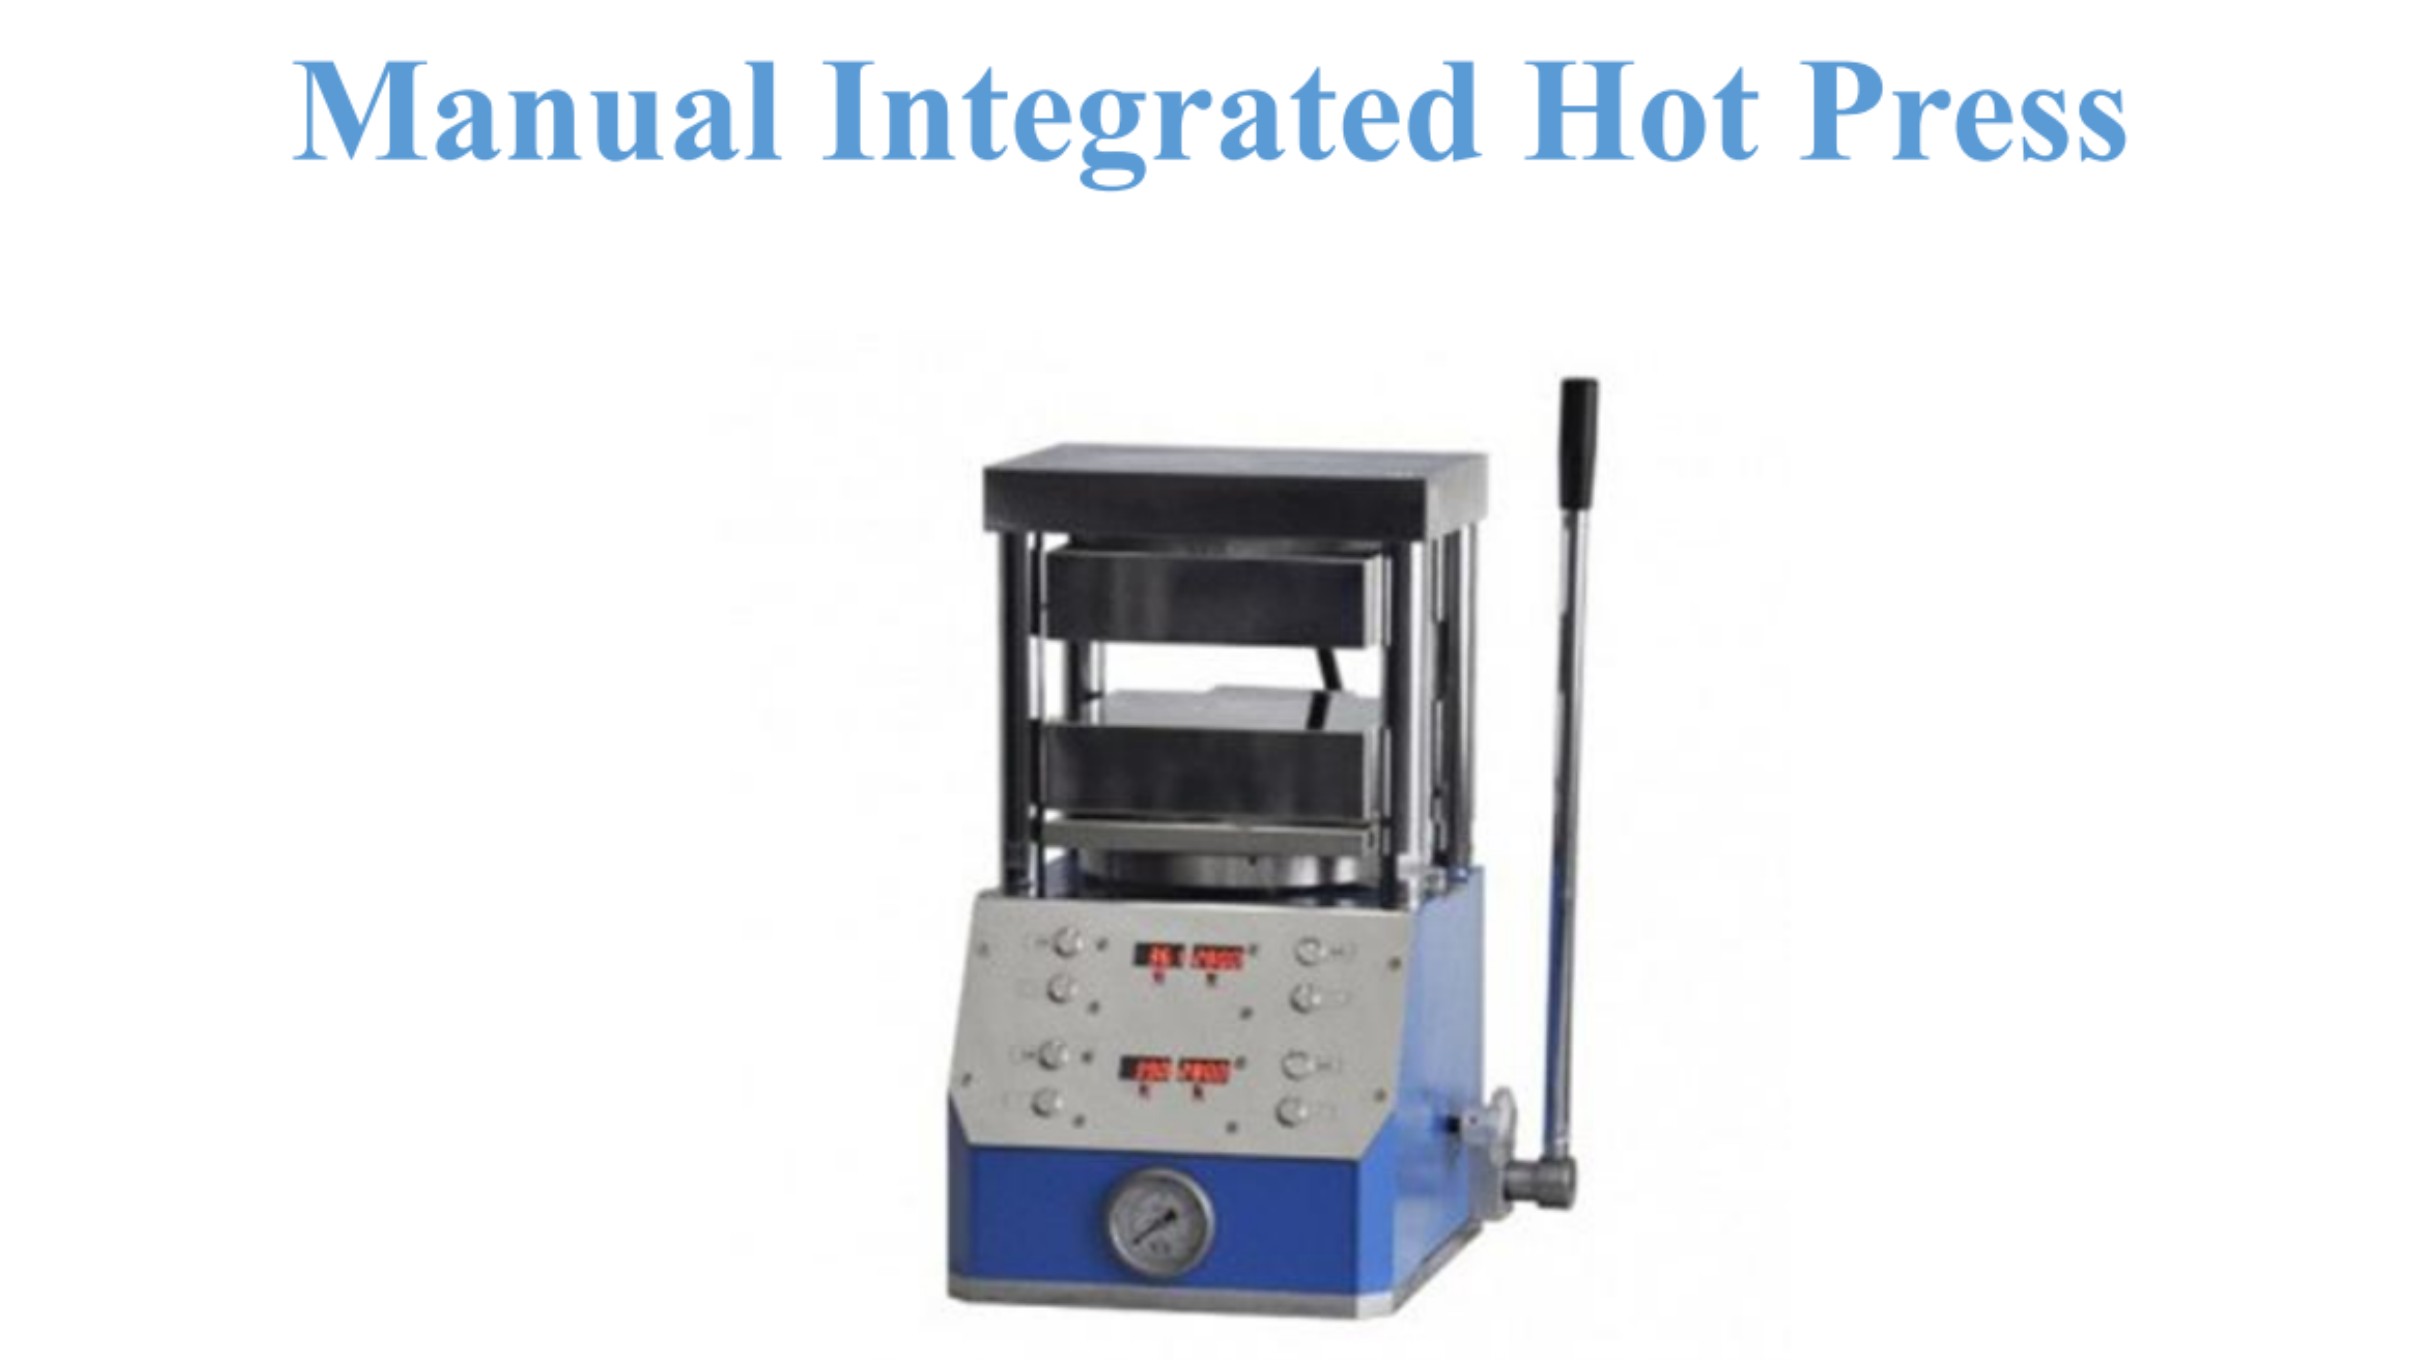 Manual Integrated Hot Press